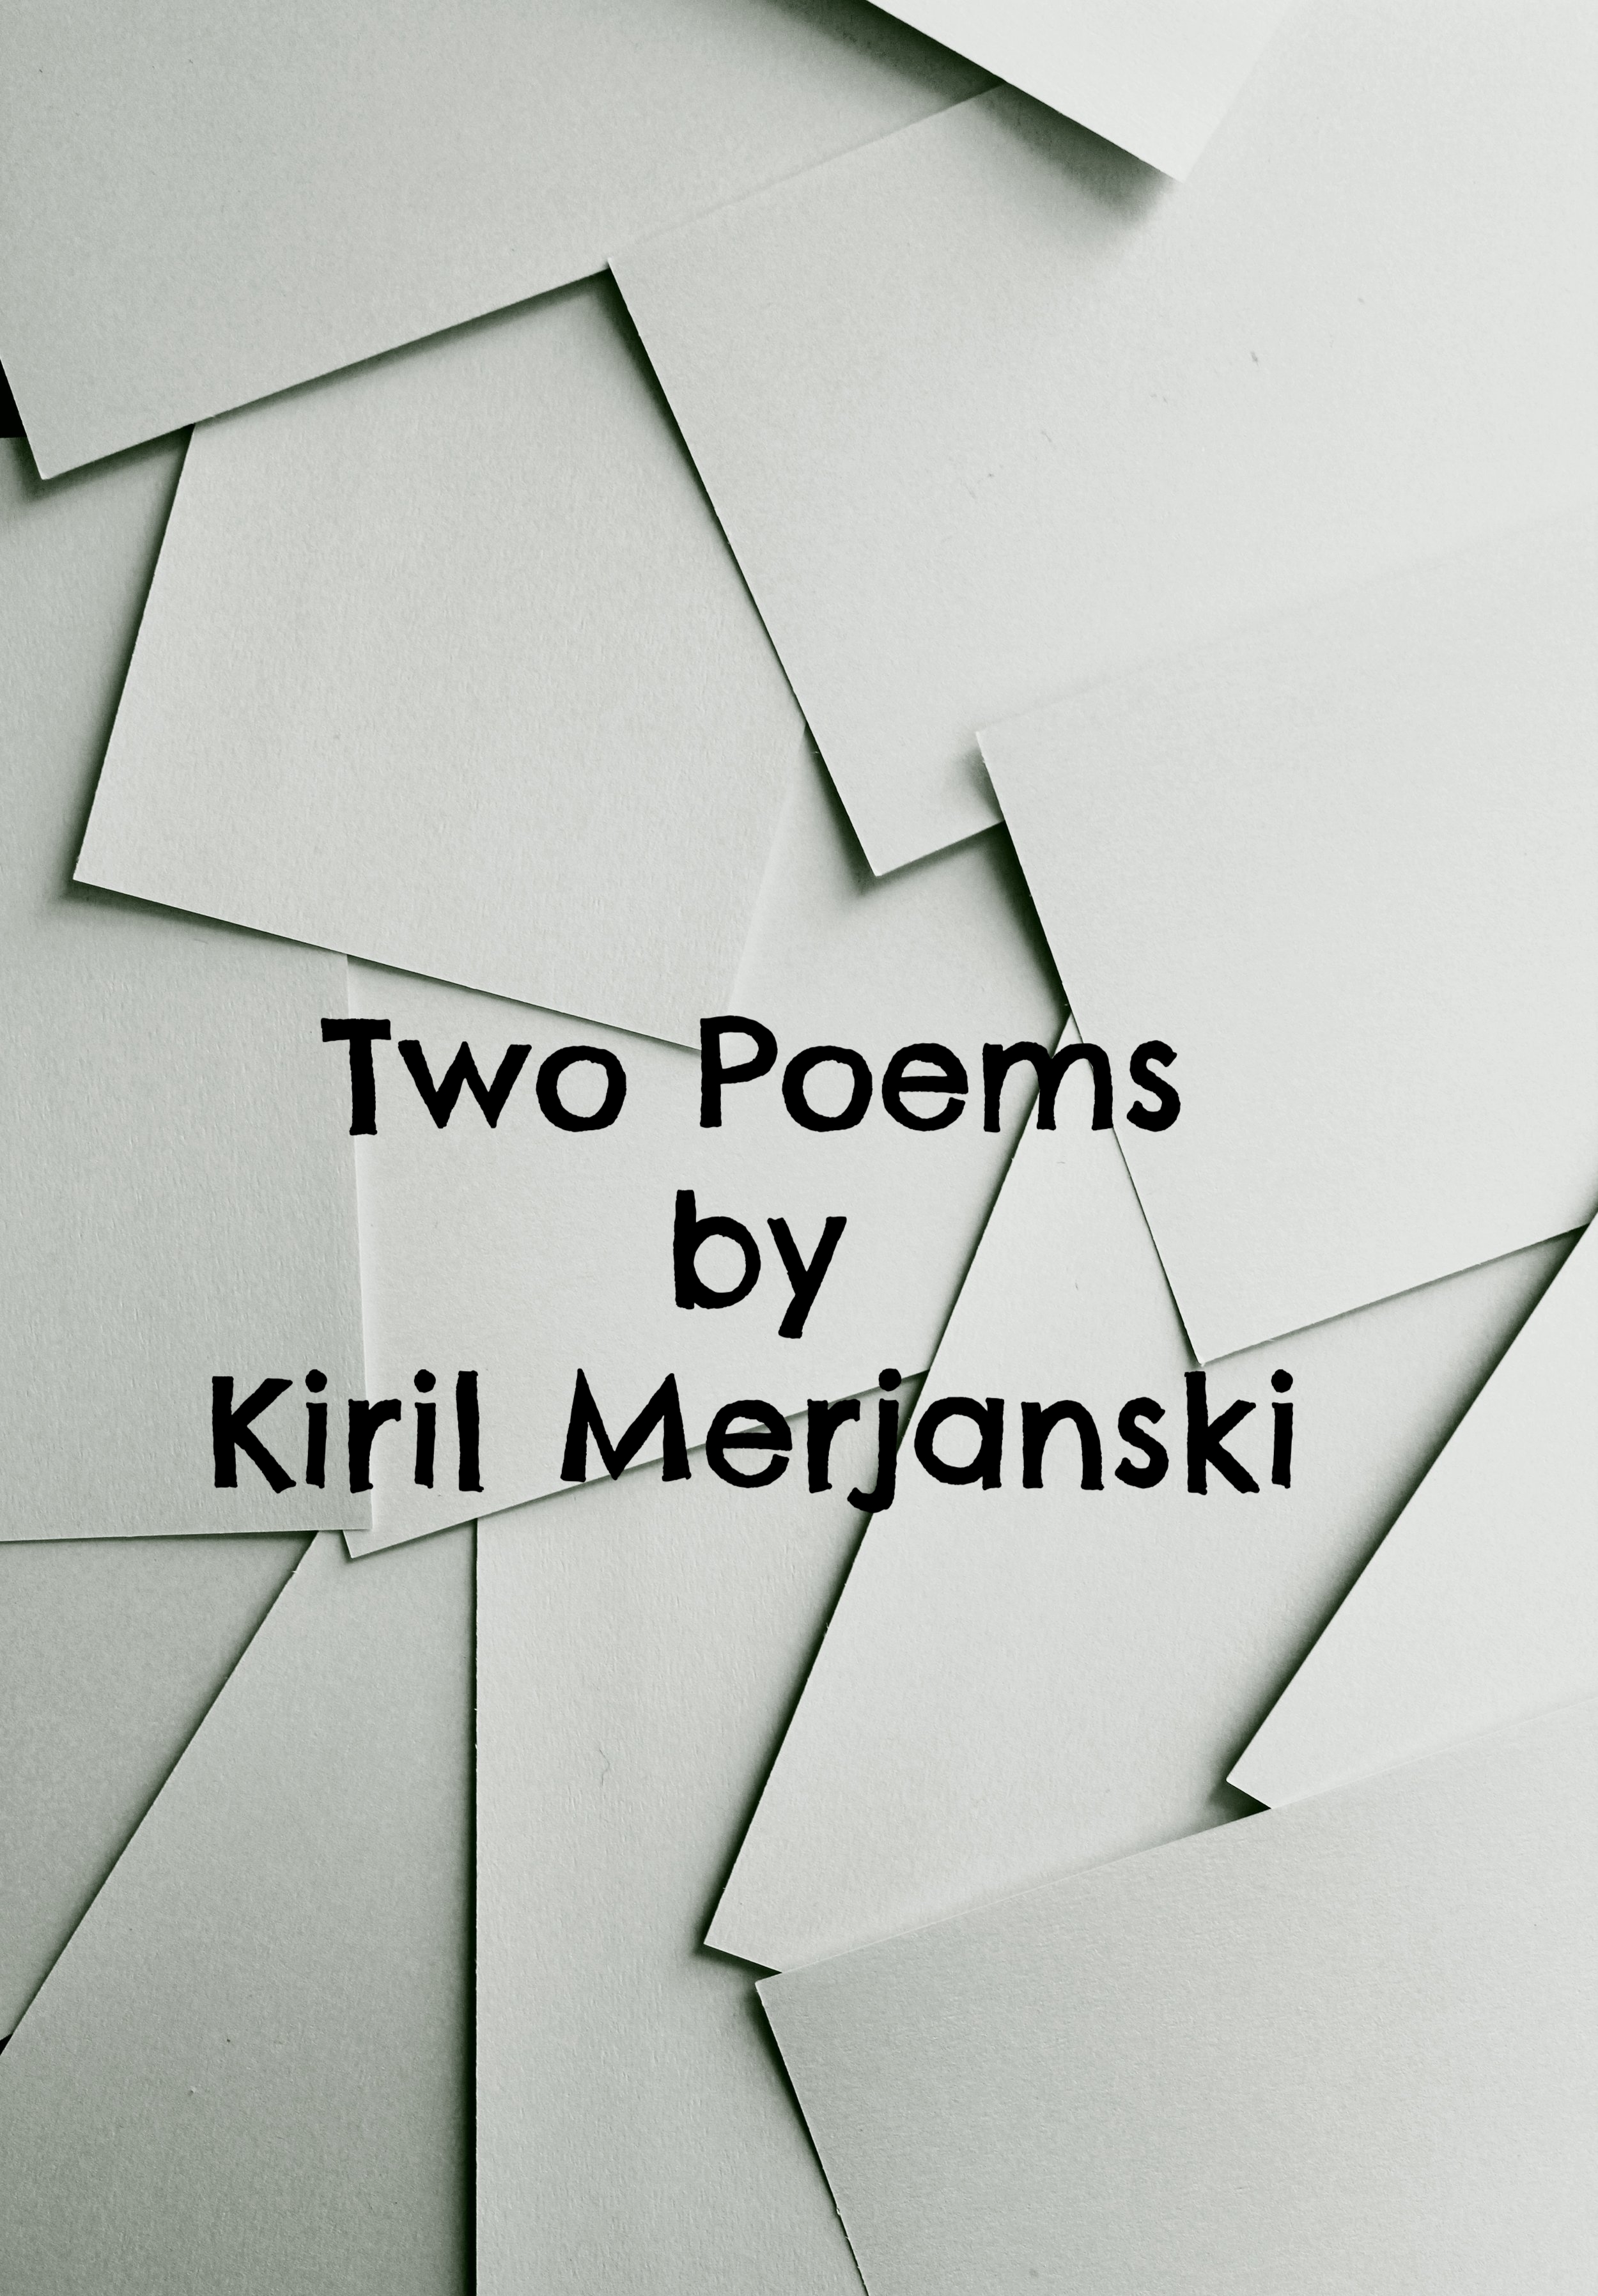 Two Poems by Kiril Merjanski